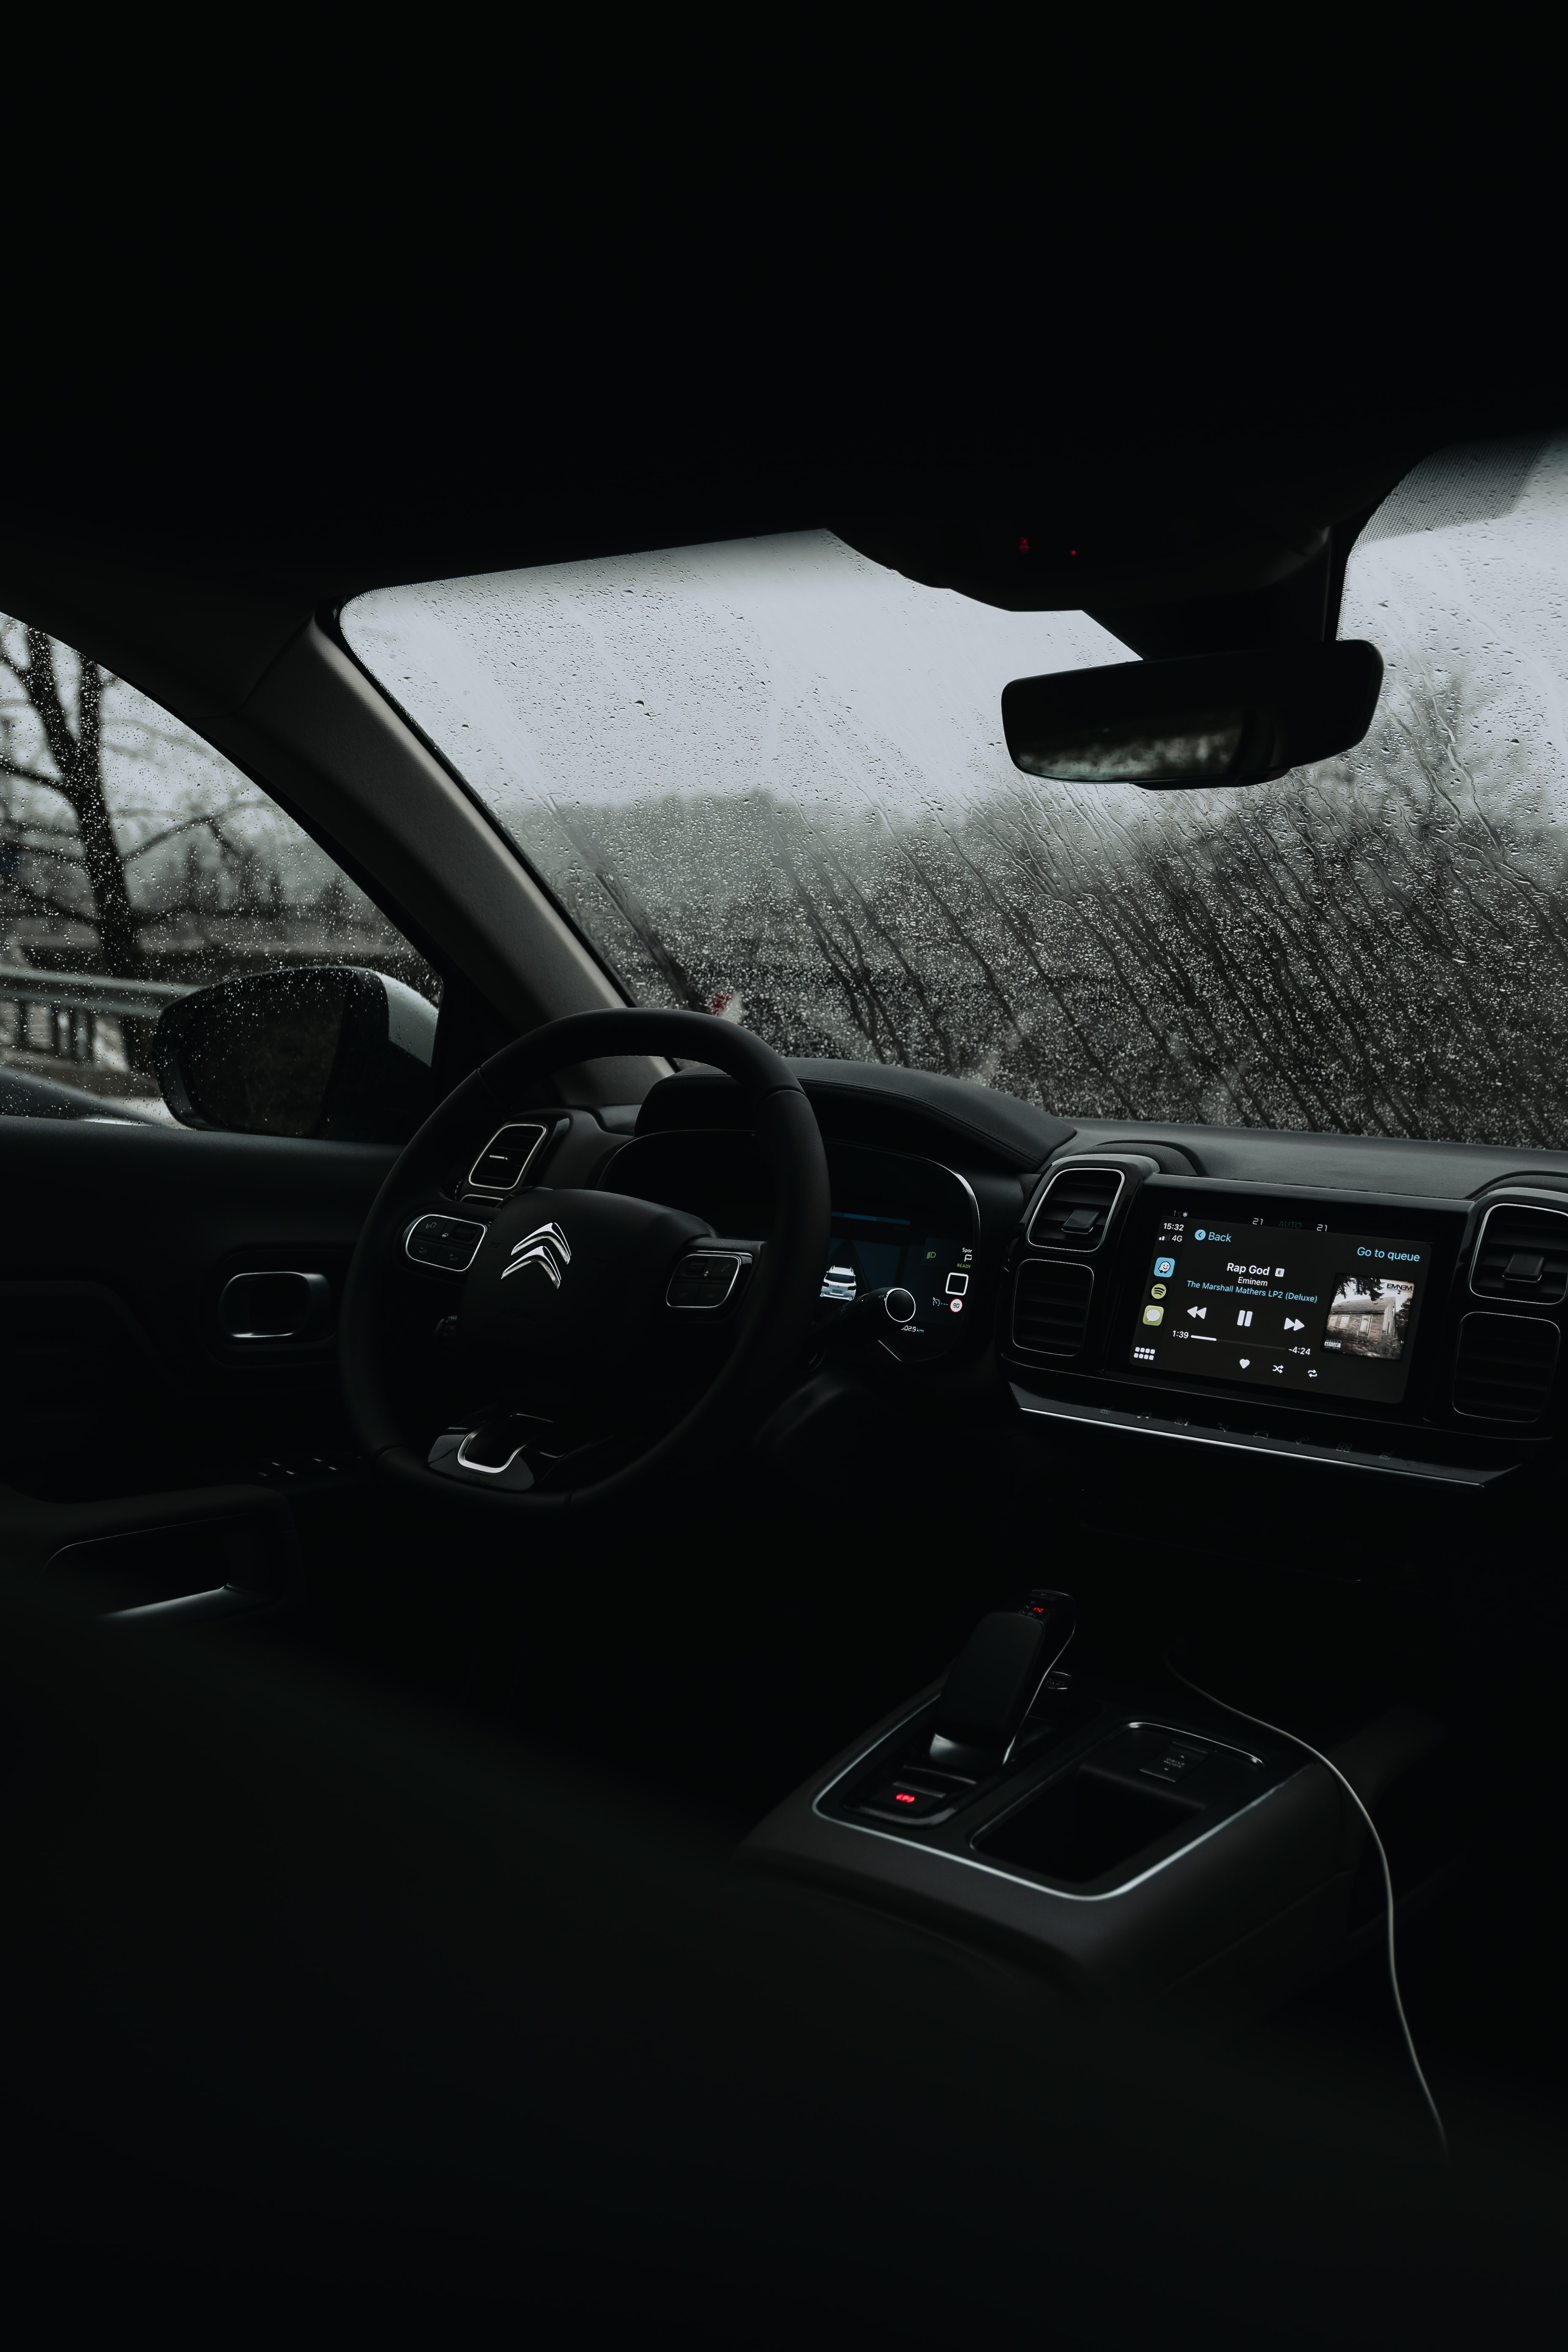 rudder, steering wheel, control panel, salon, citroen, cars, black, car